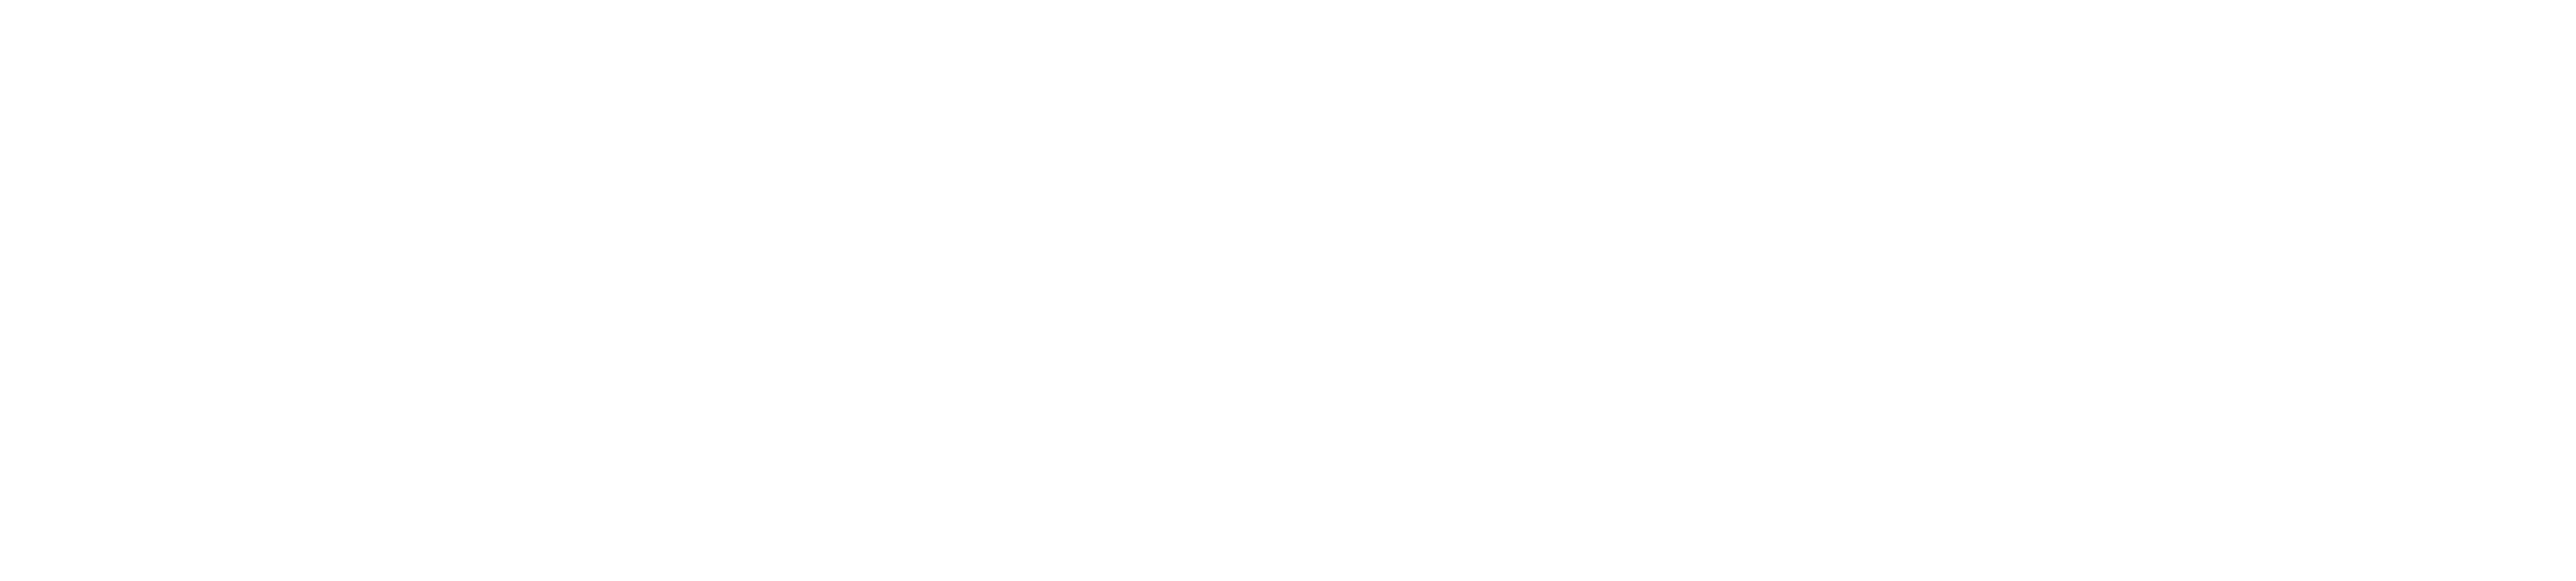 Royal Orbit Holding Group